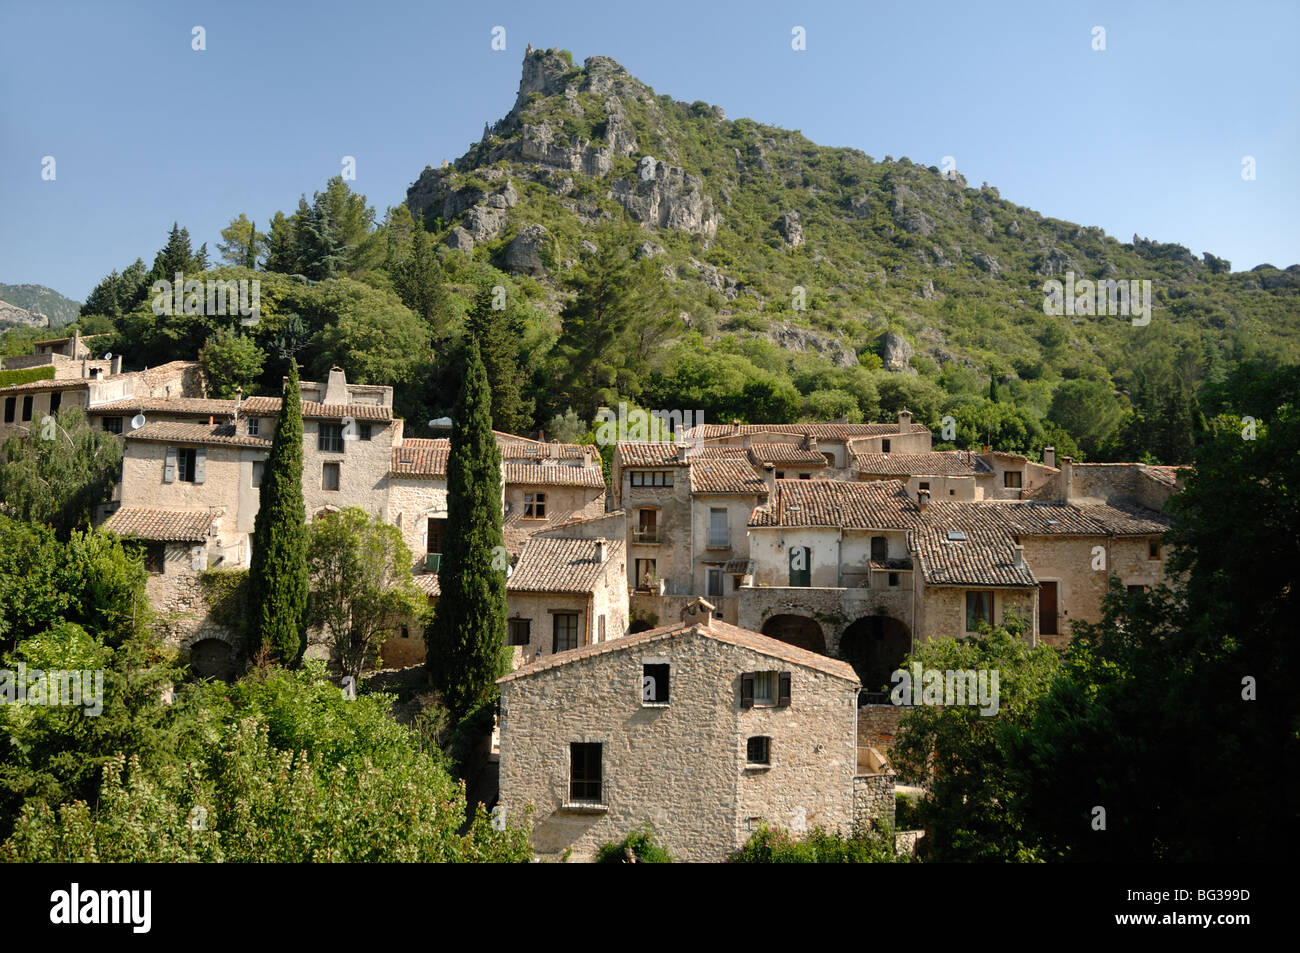 View over Village, Old Village Houses or Stone Houses of Saint Guilhem le Desert, Hérault, Languedoc Roussillon, France Stock Photo